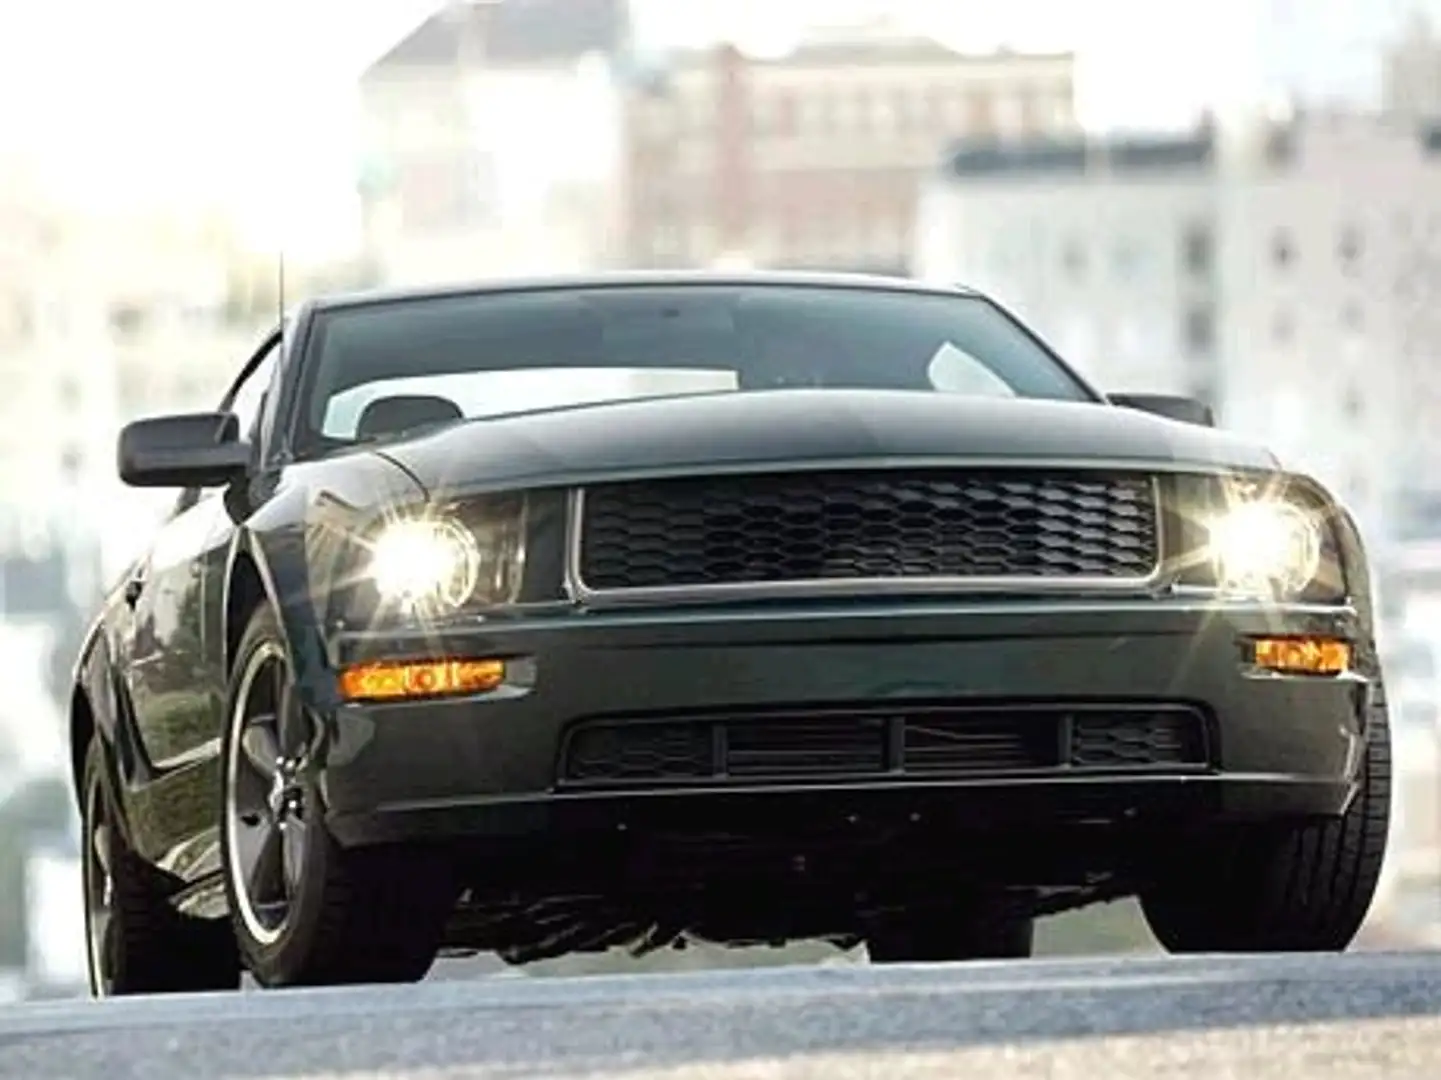 Ford Mustang Bullitt - Sonderedition Green - 1